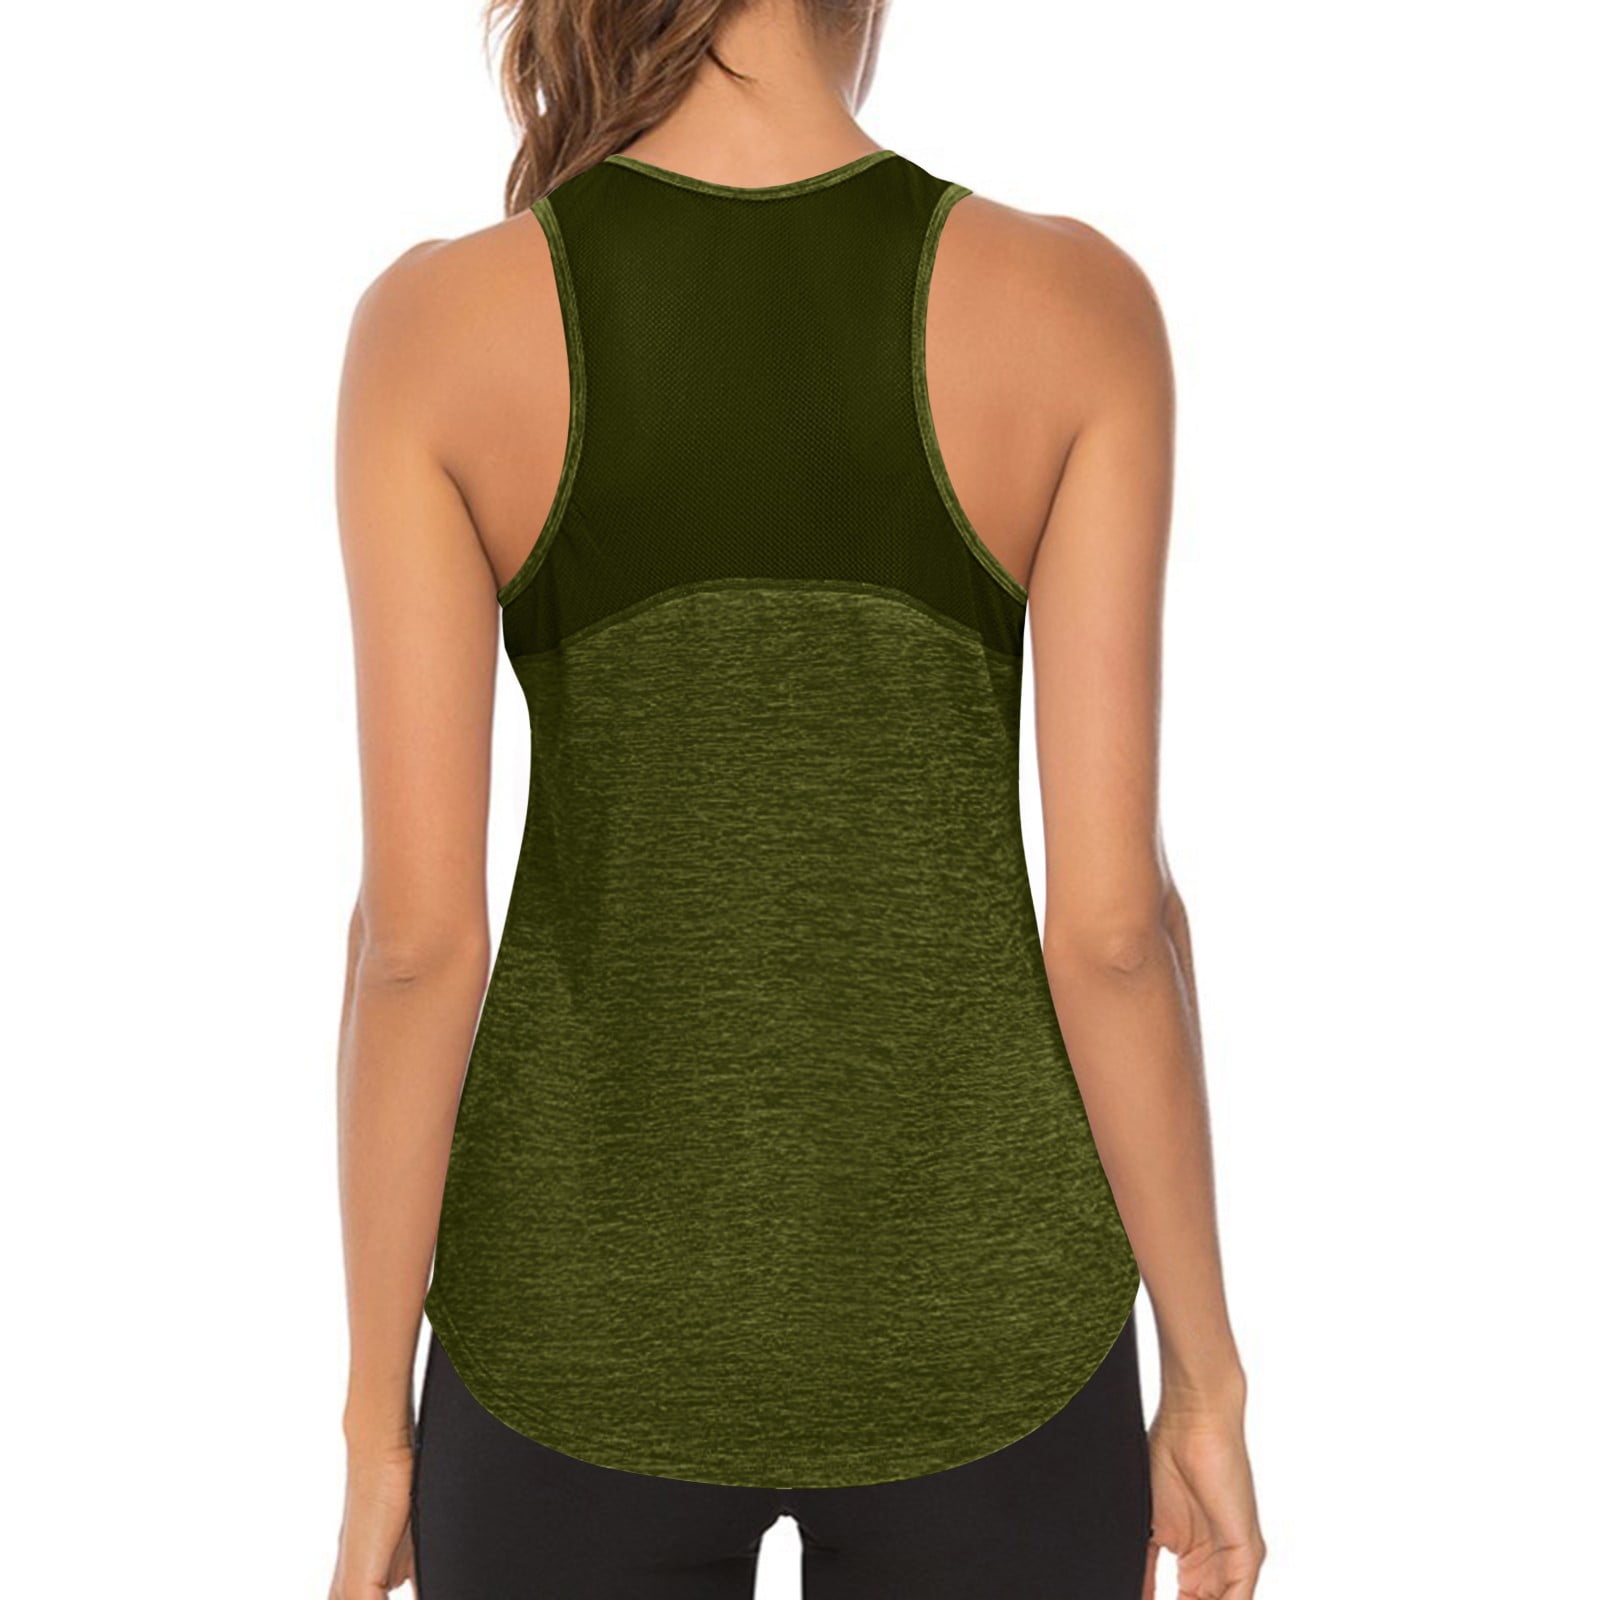 MRULIC tank top for women Women Workout Tops Sports Running Tank Mesh Yoga  Training Shirts Womens tank tops Army Green + XL 